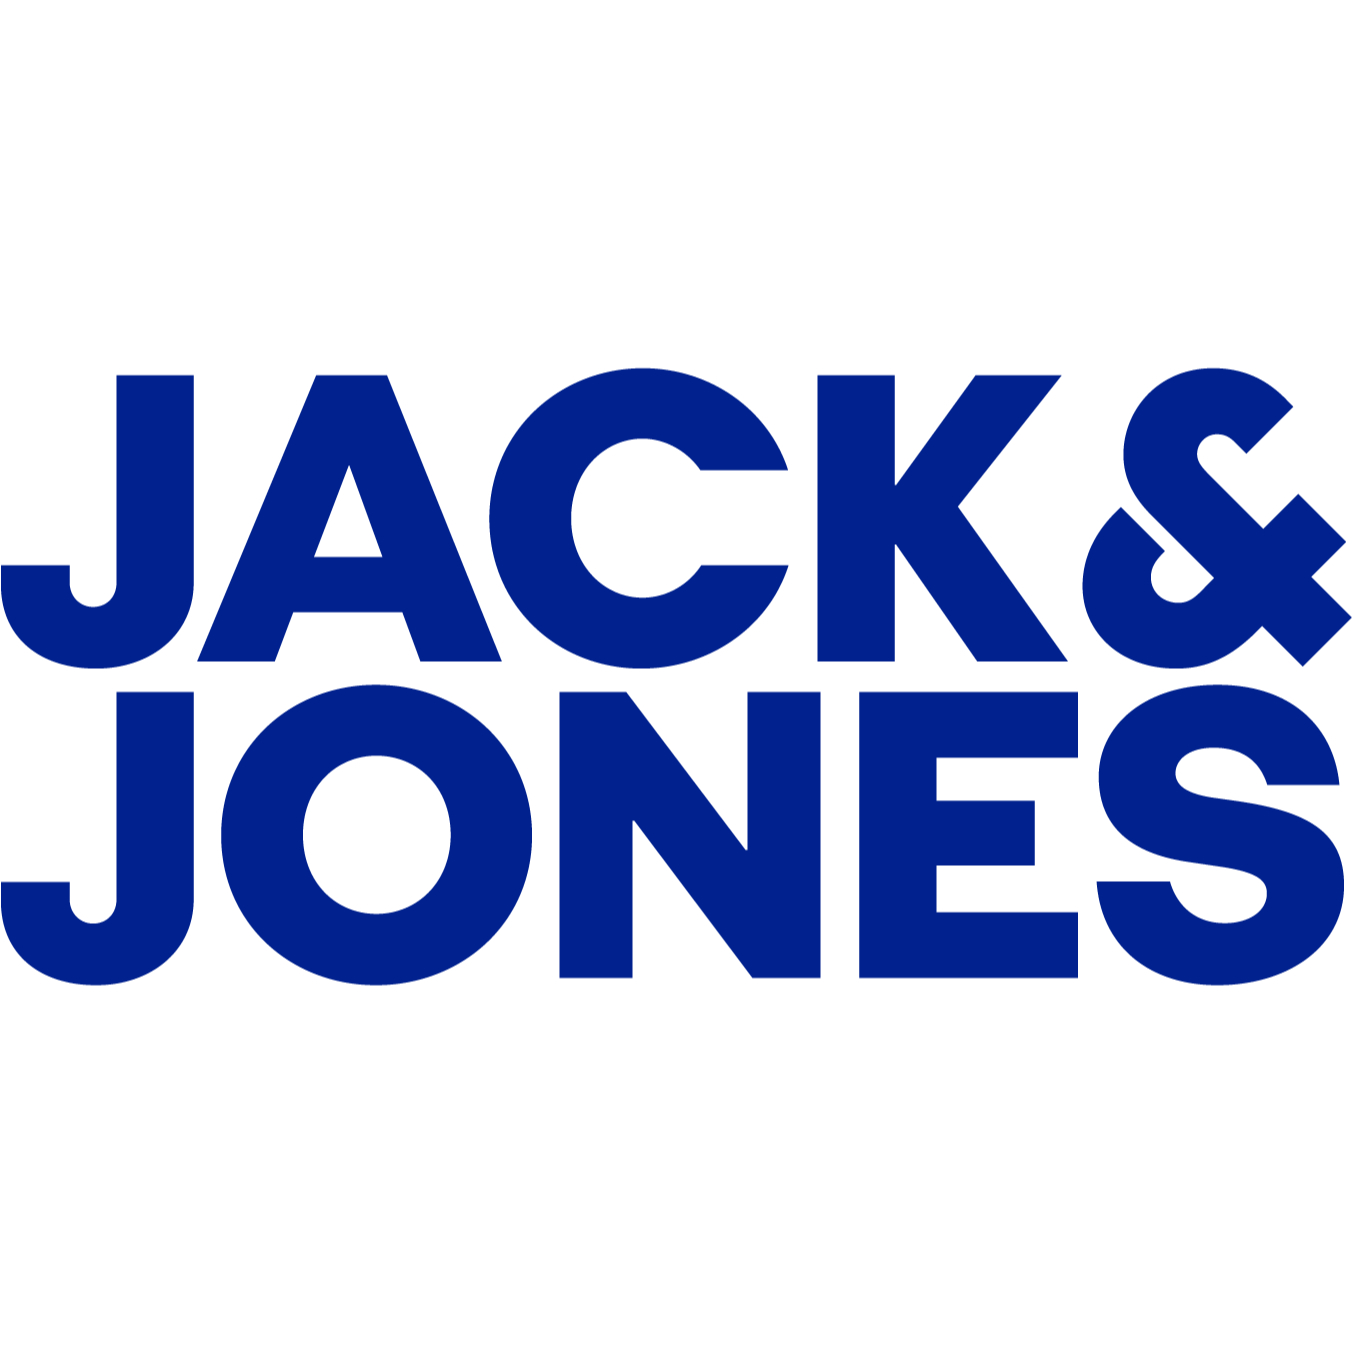 JACK & JONES - Grossistes et fabricants de vêtements